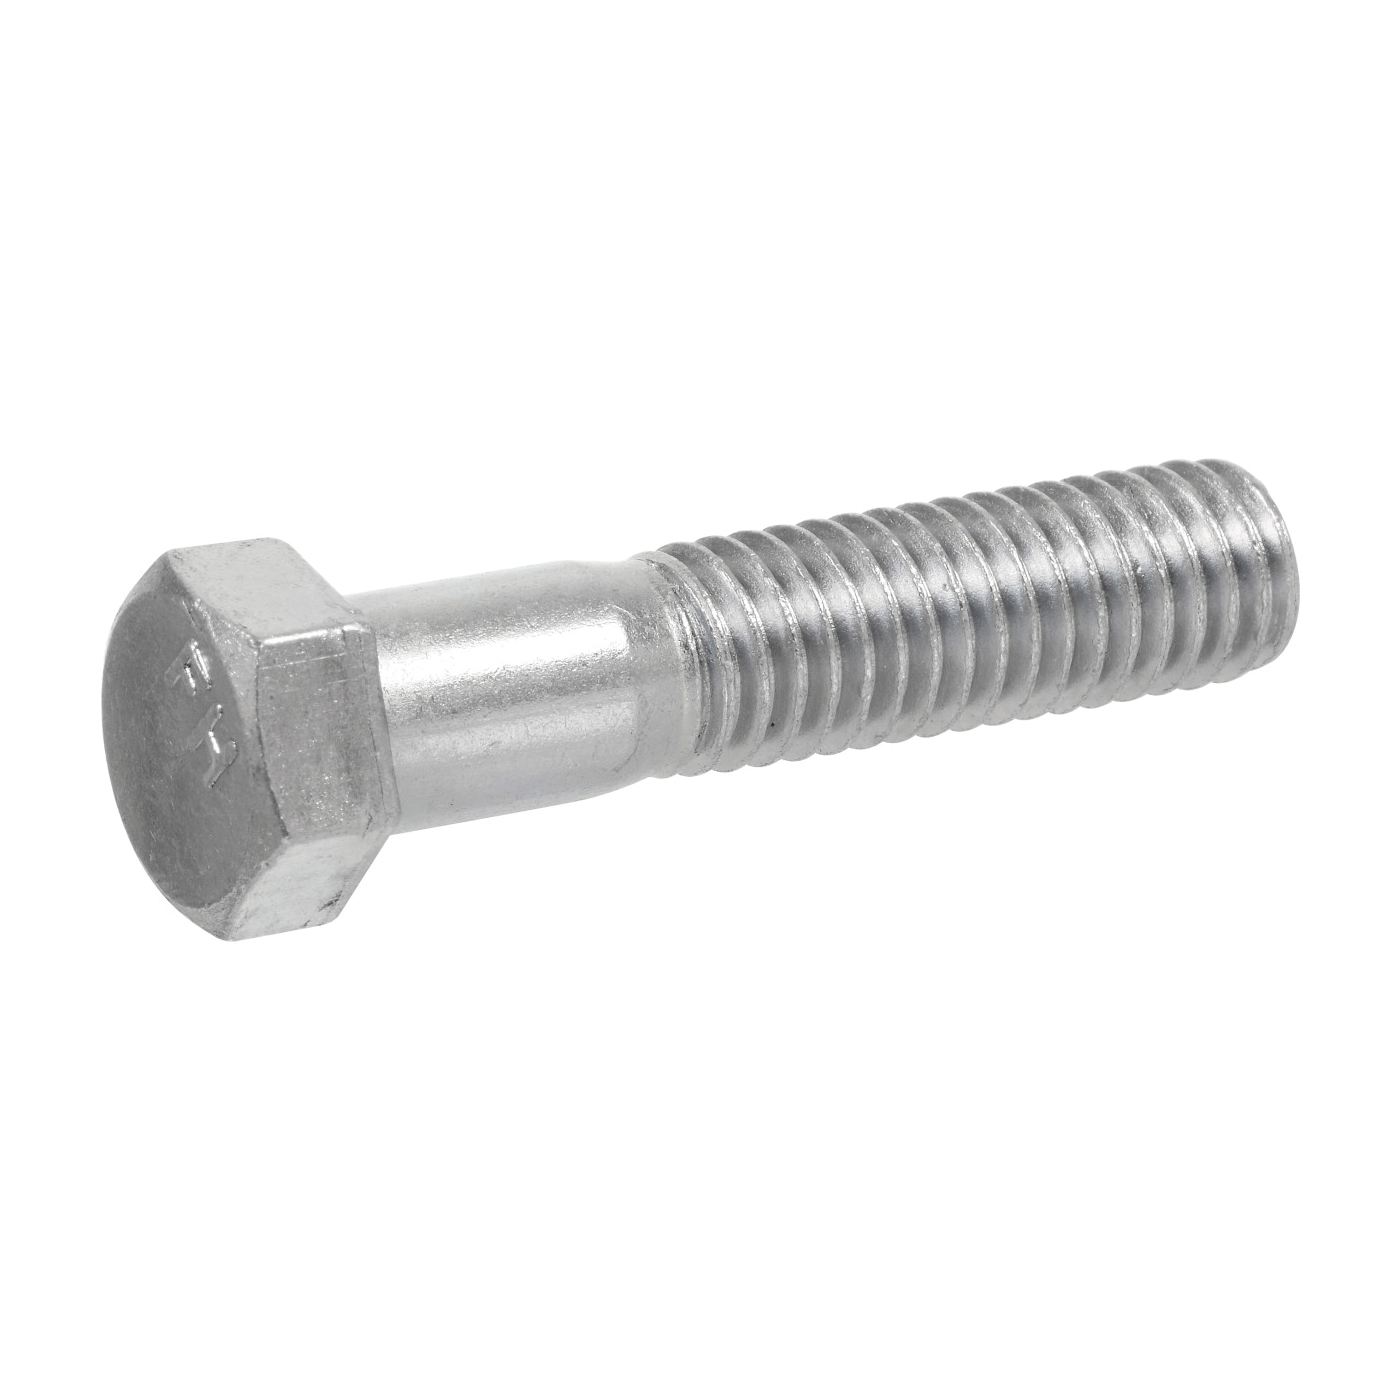 880673 Hex Bolt, M7-1 Thread, 50 mm OAL, 8.8 Grade, Steel, Zinc-Plated, Metric Measuring, Fine Thread